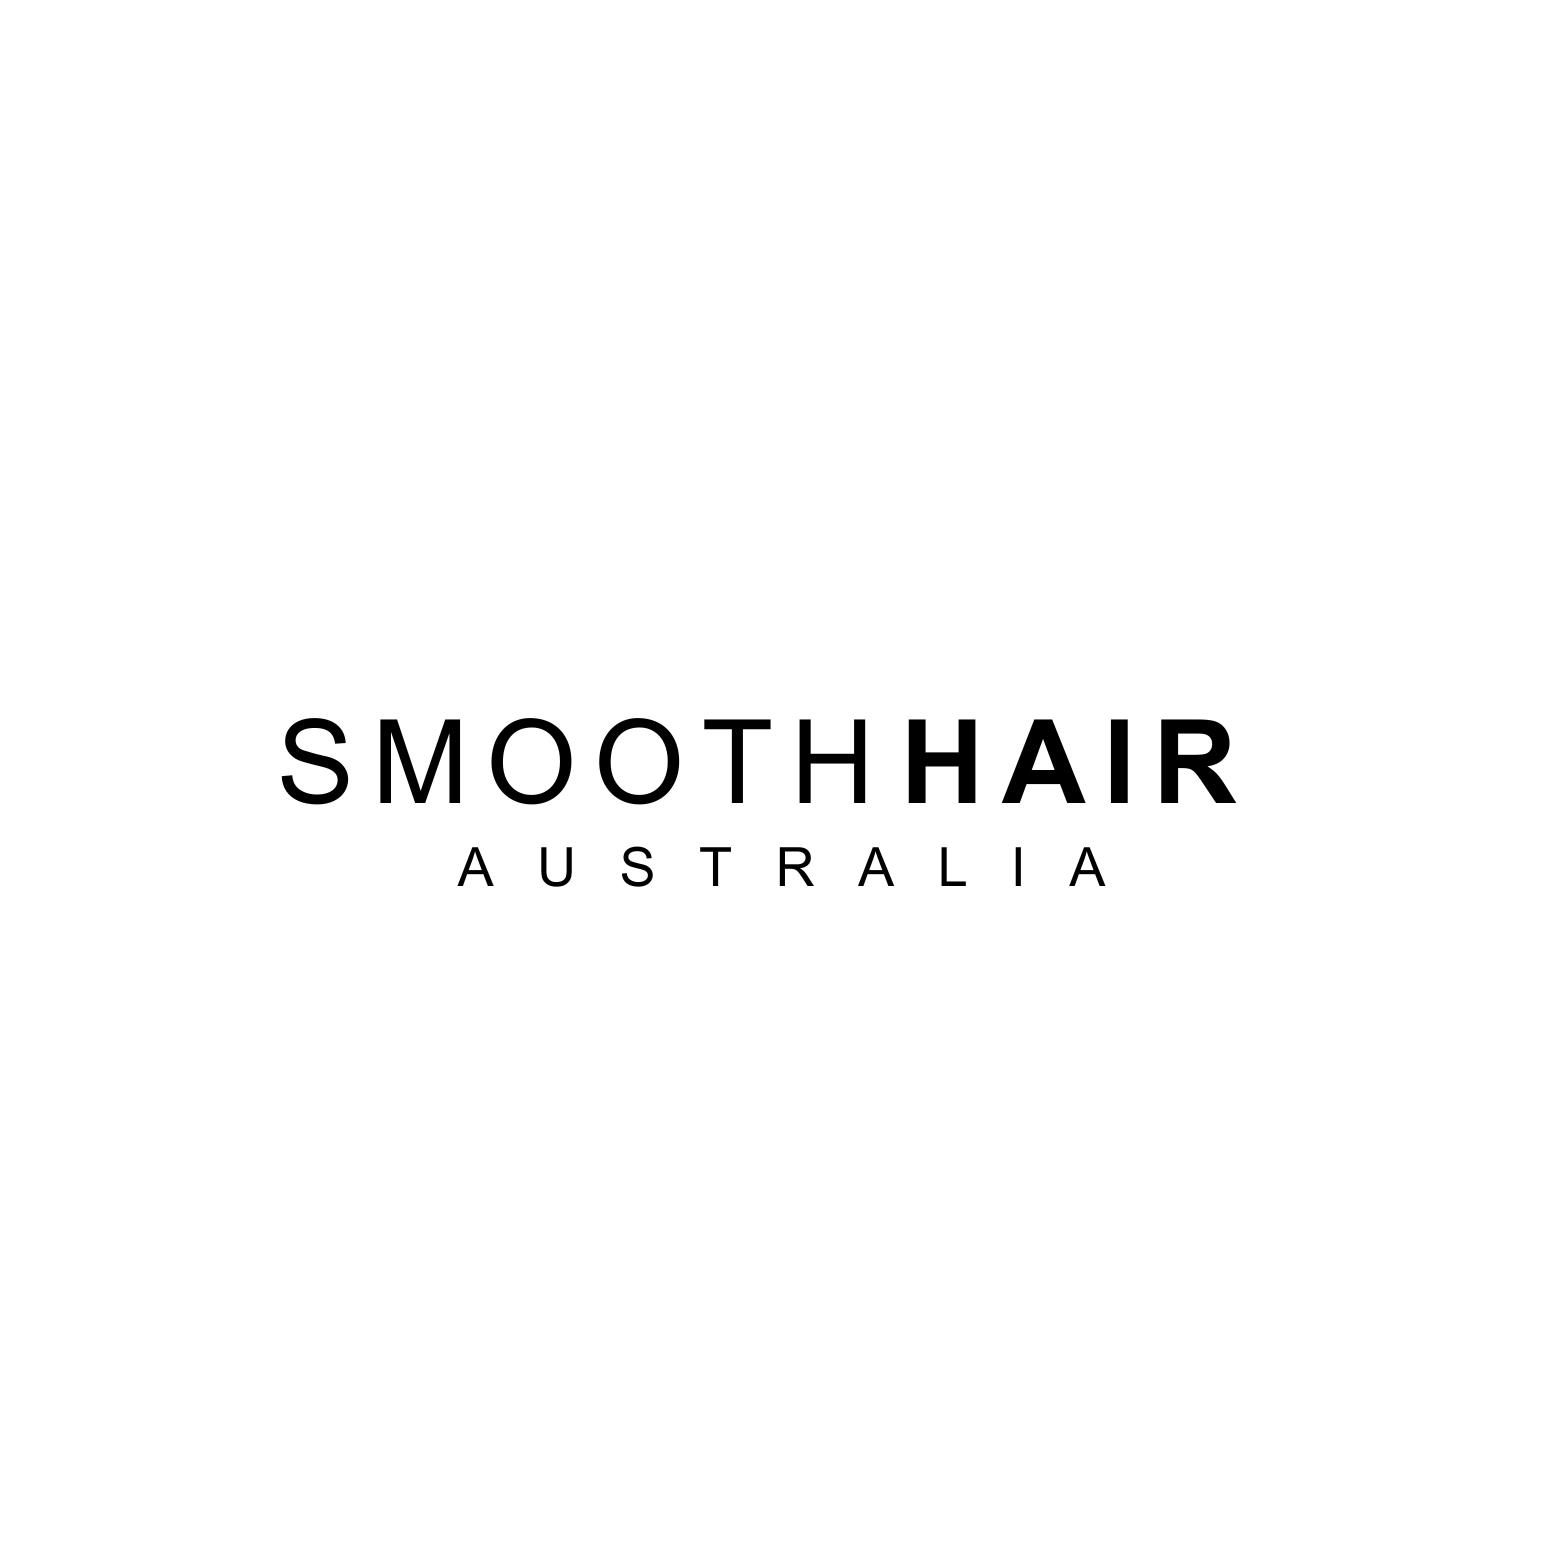 Smooth Hair Australia